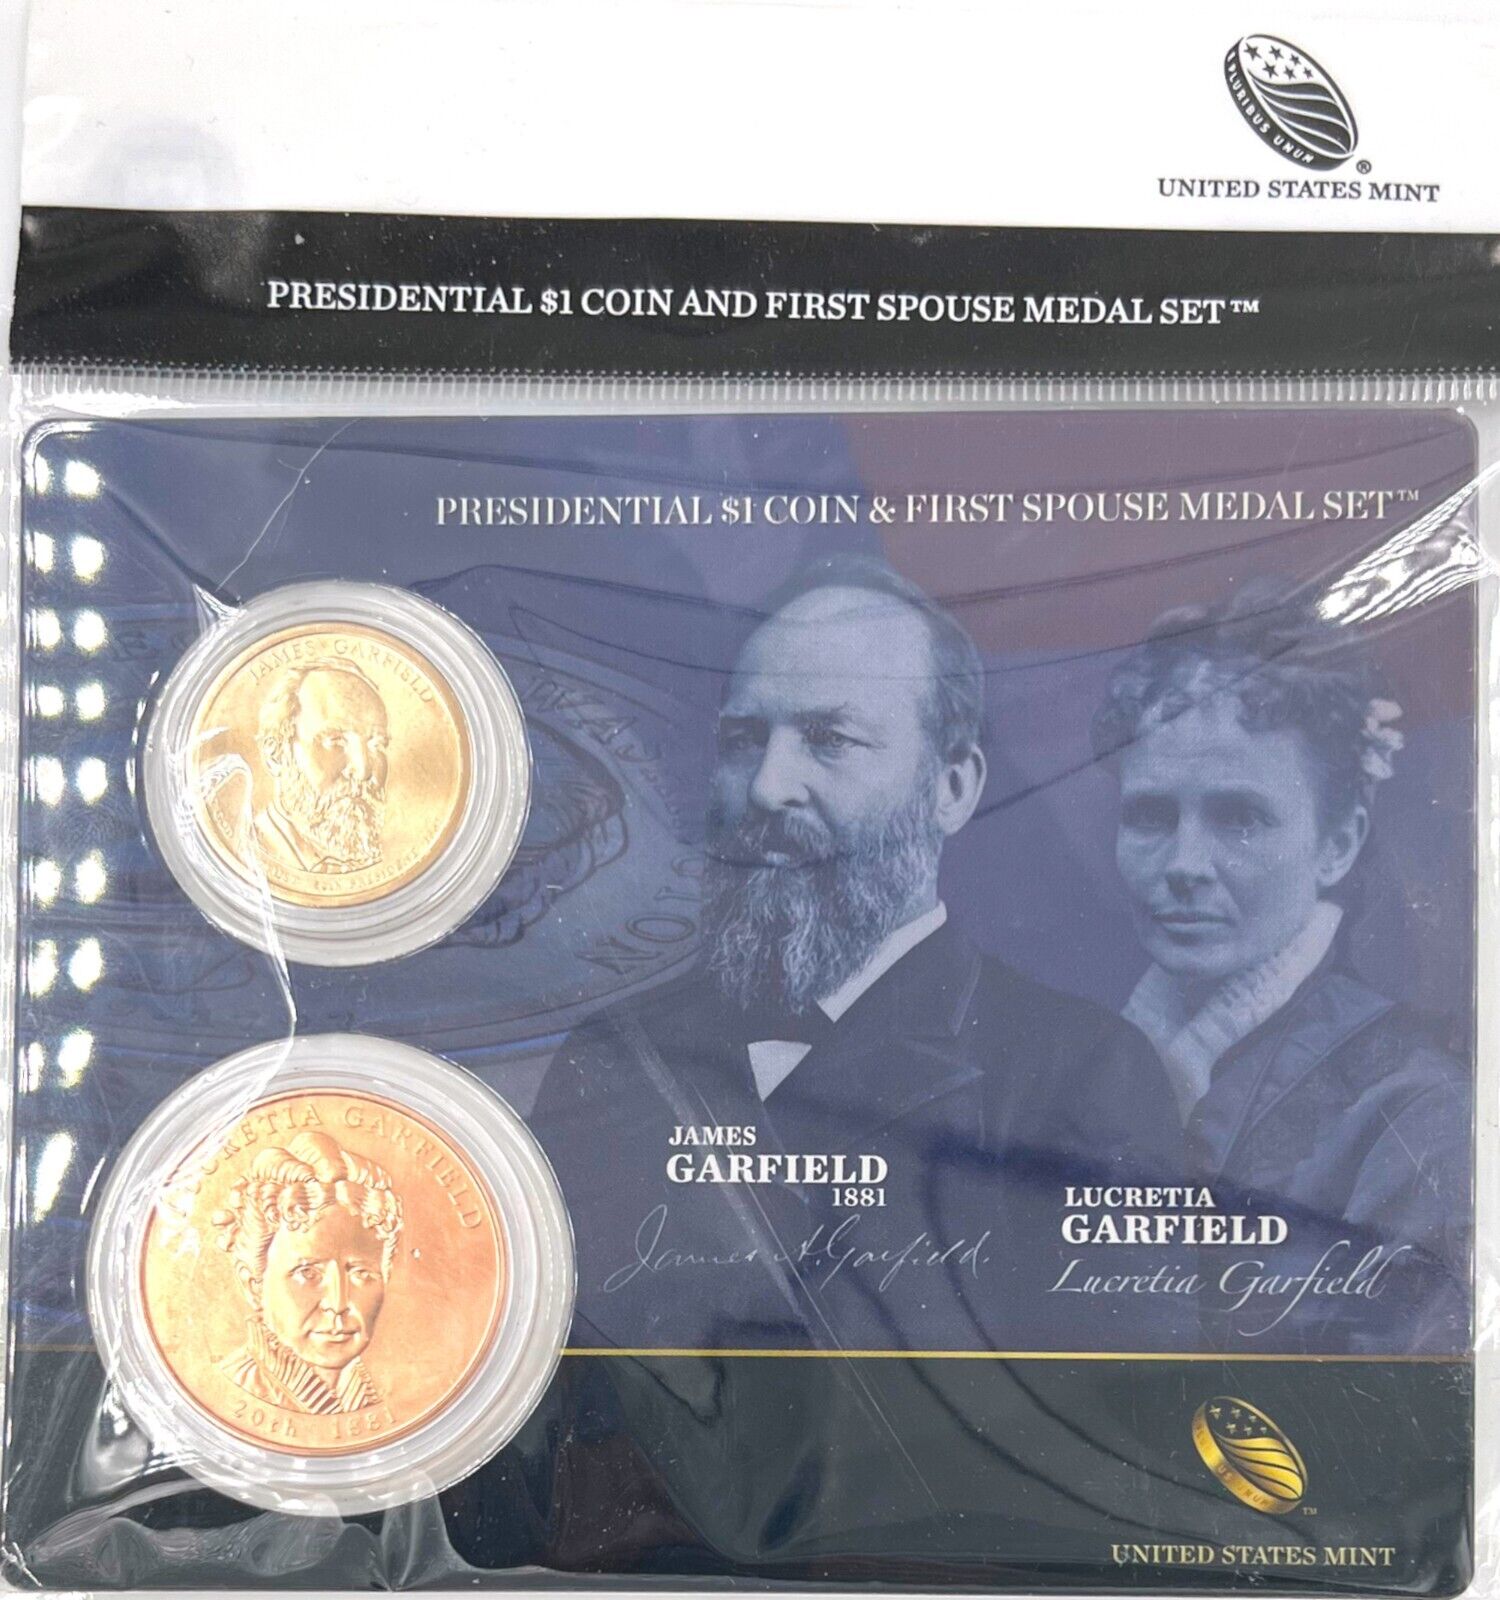 1881 Presidential $1 Coin & First Spouse Medal Set James & Lucretia Garfield